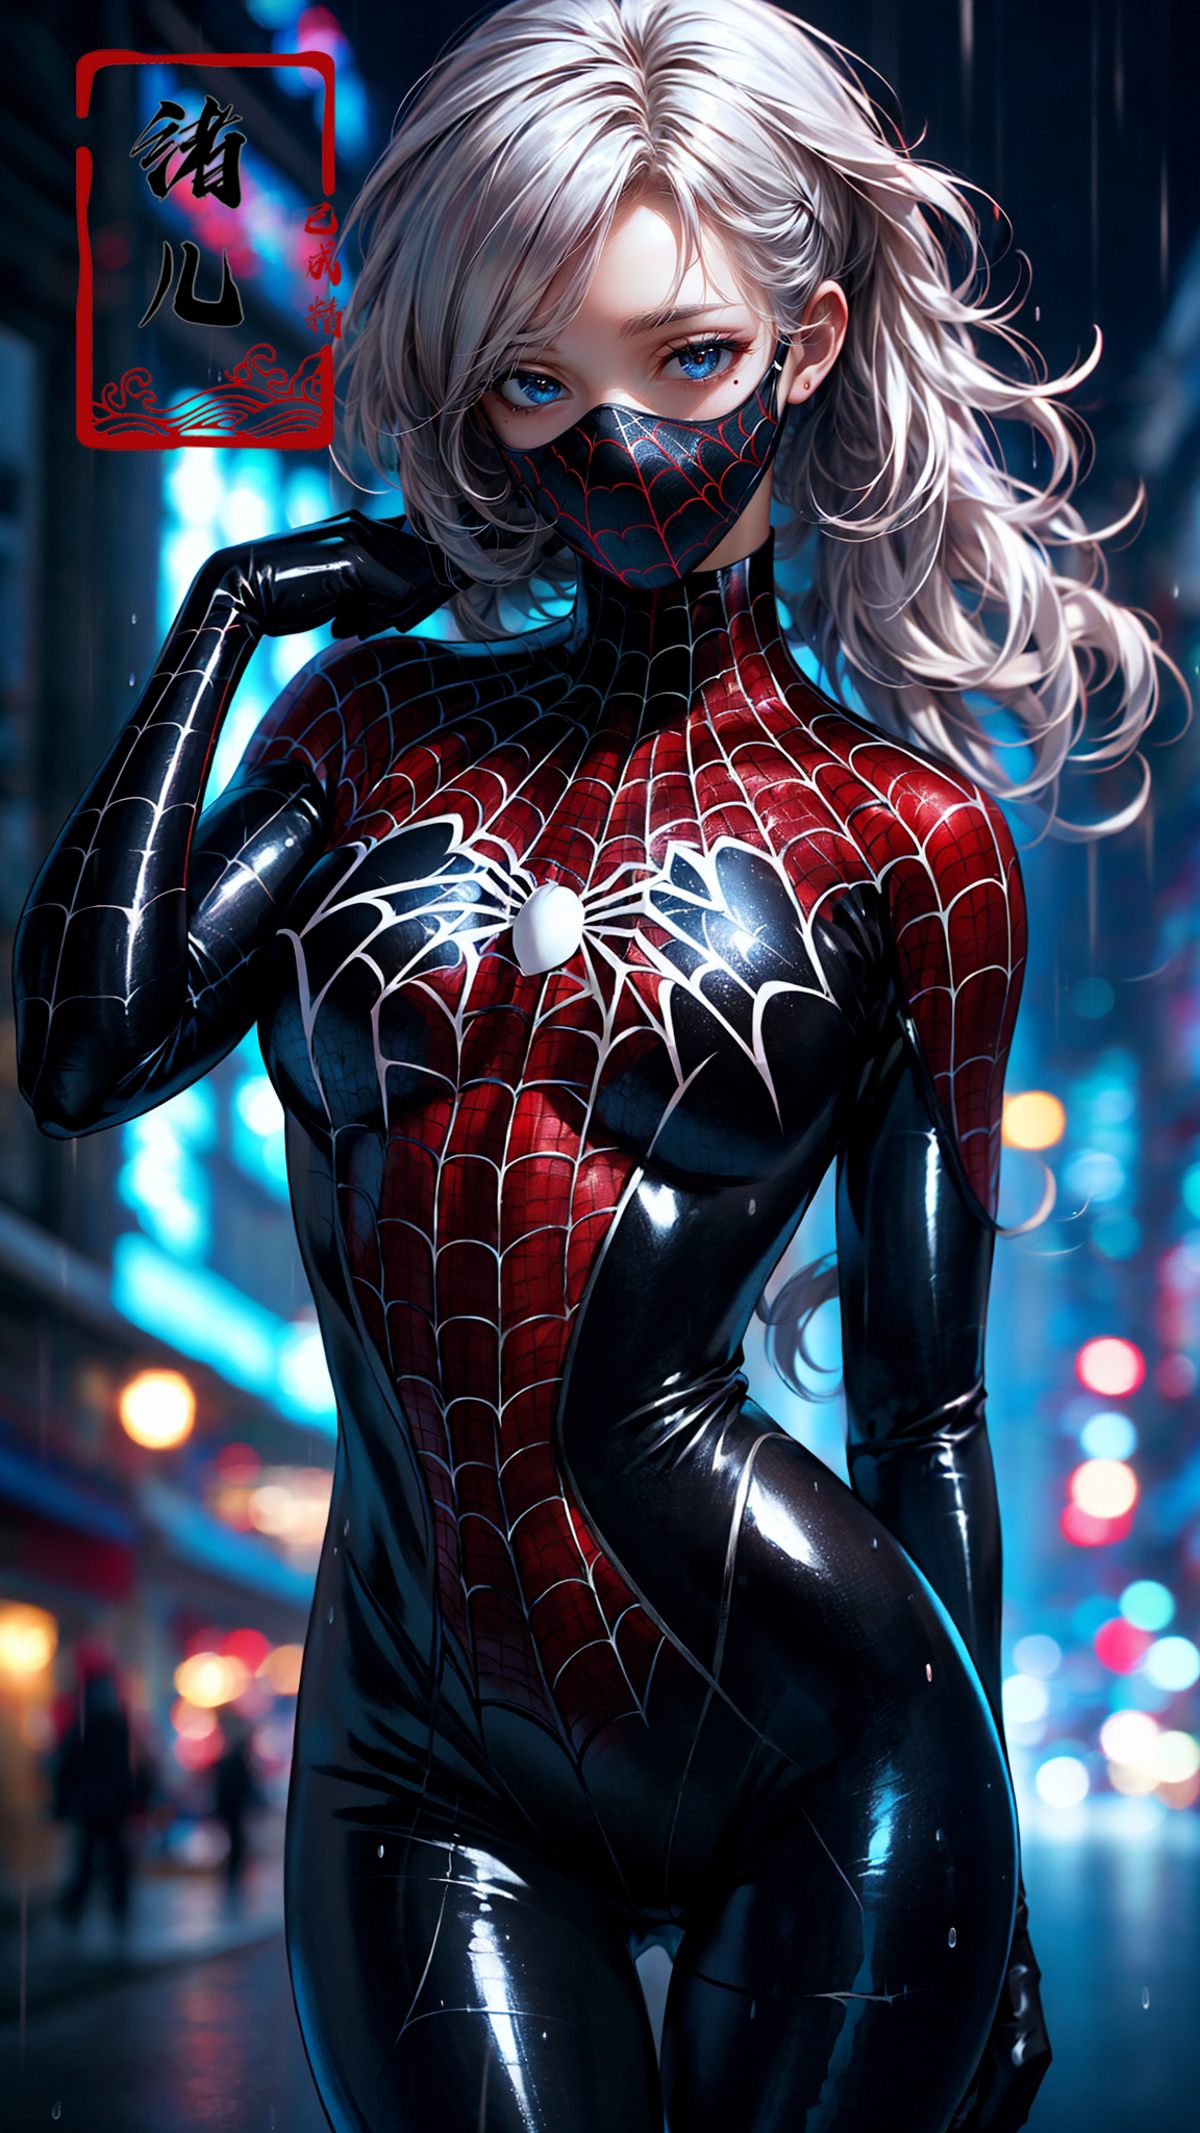 绪儿-蜘蛛侠服装Spider-man costume image by XRYCJ